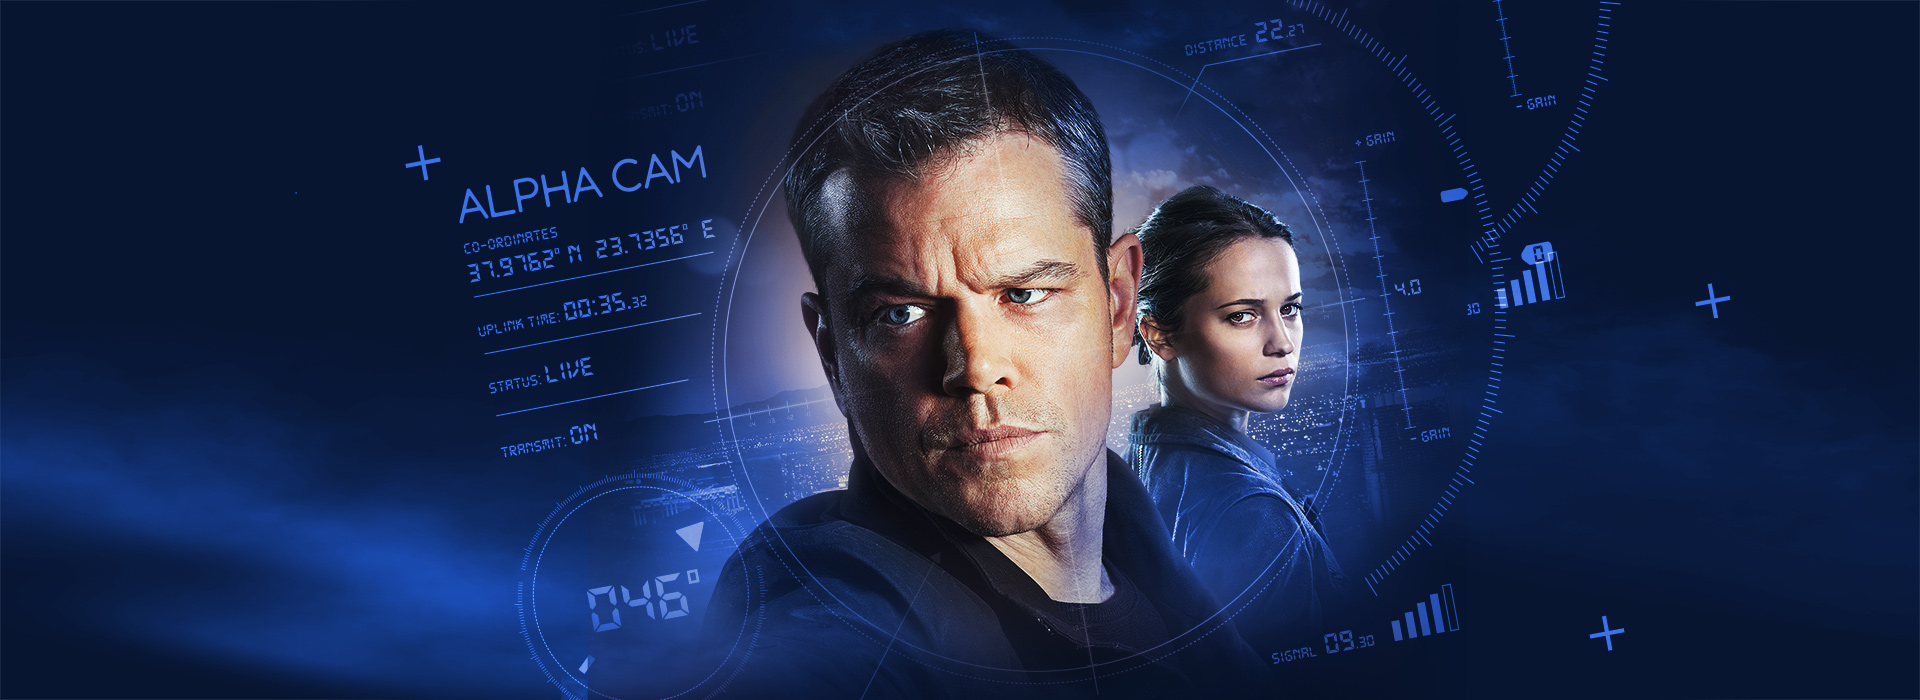 Movie poster Jason Bourne